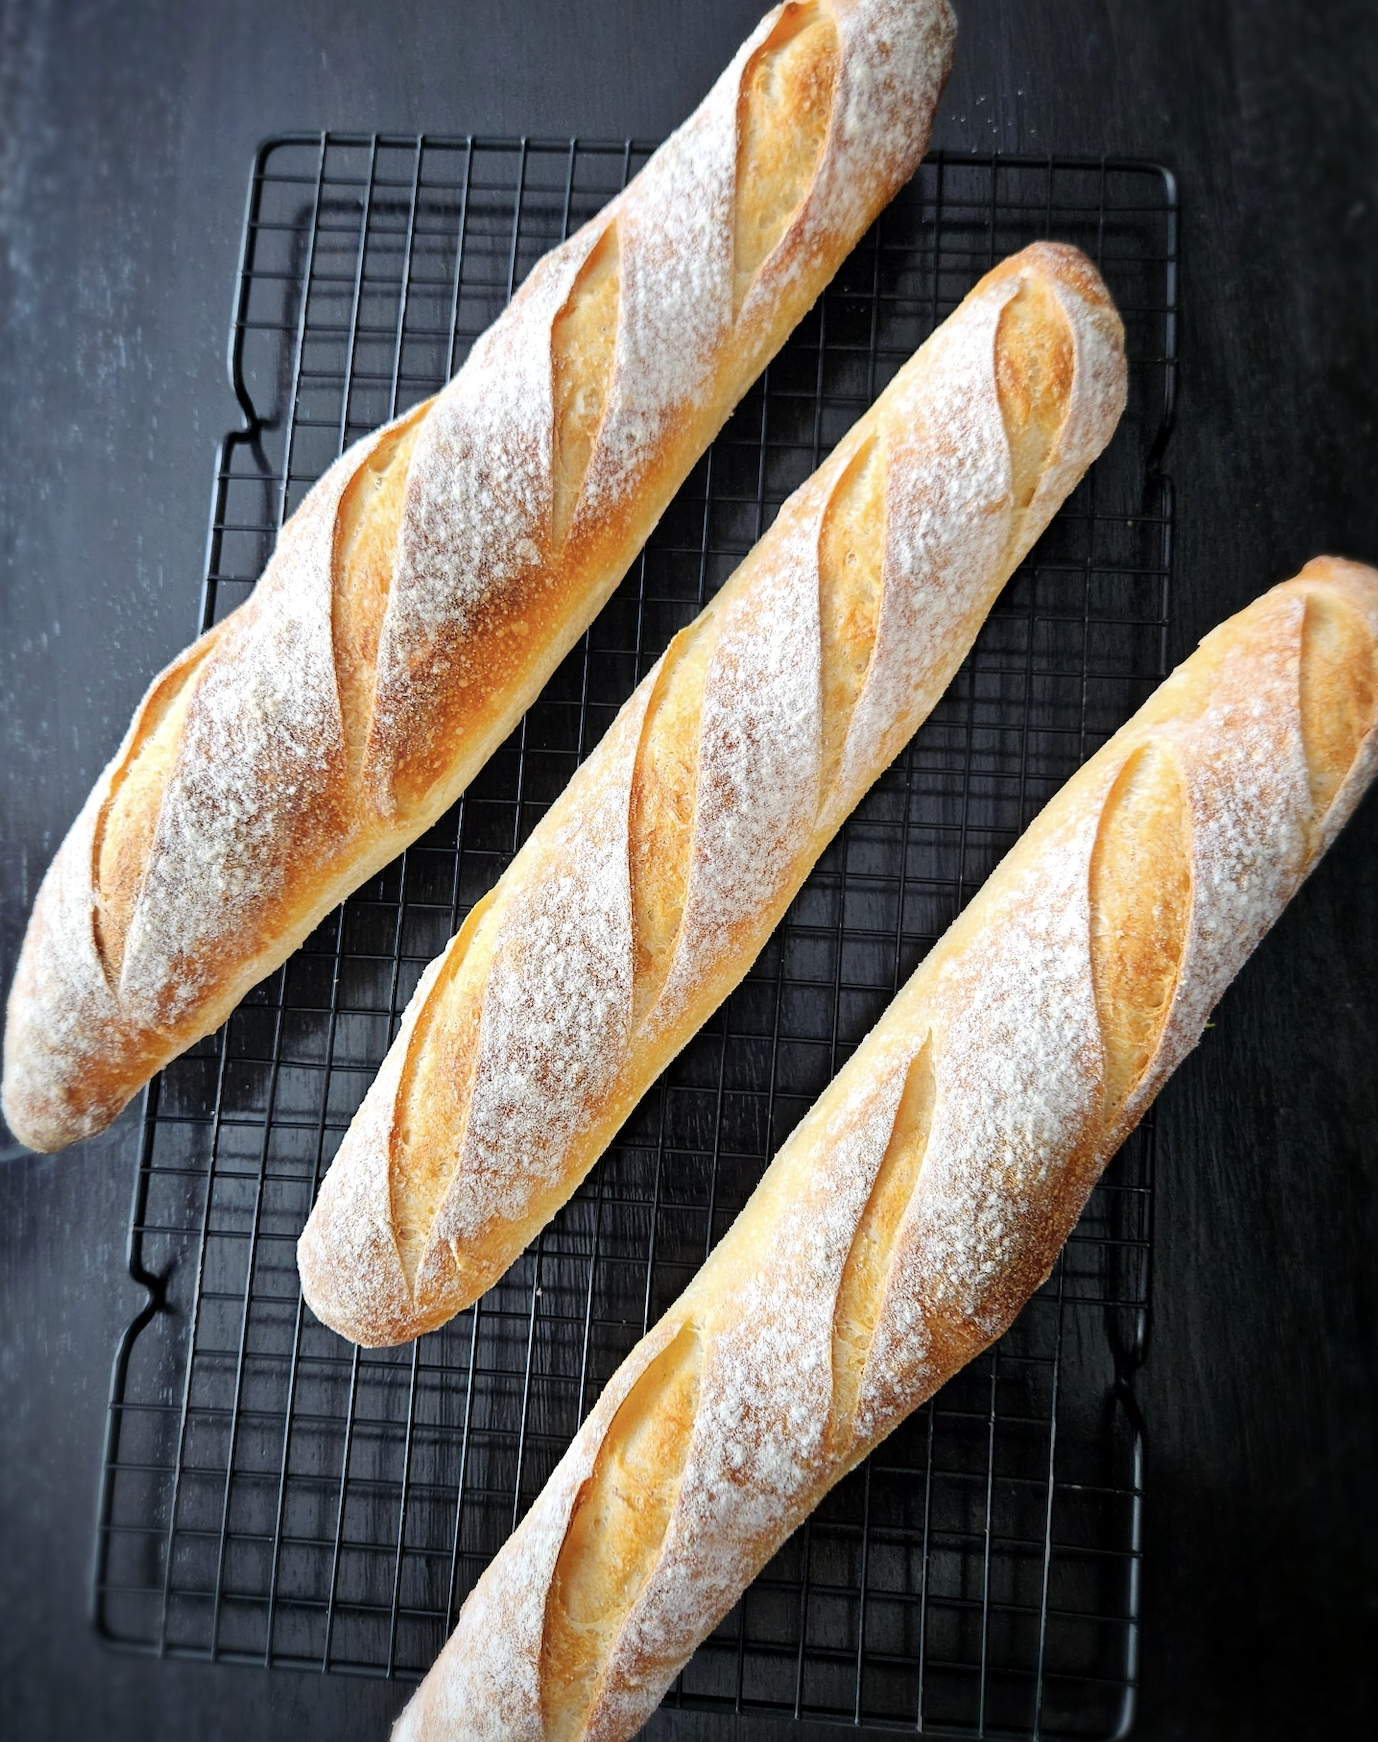 sourdough bread influencer in edmonton alberta canada kristy buy summit sourdough starter online home baker 9